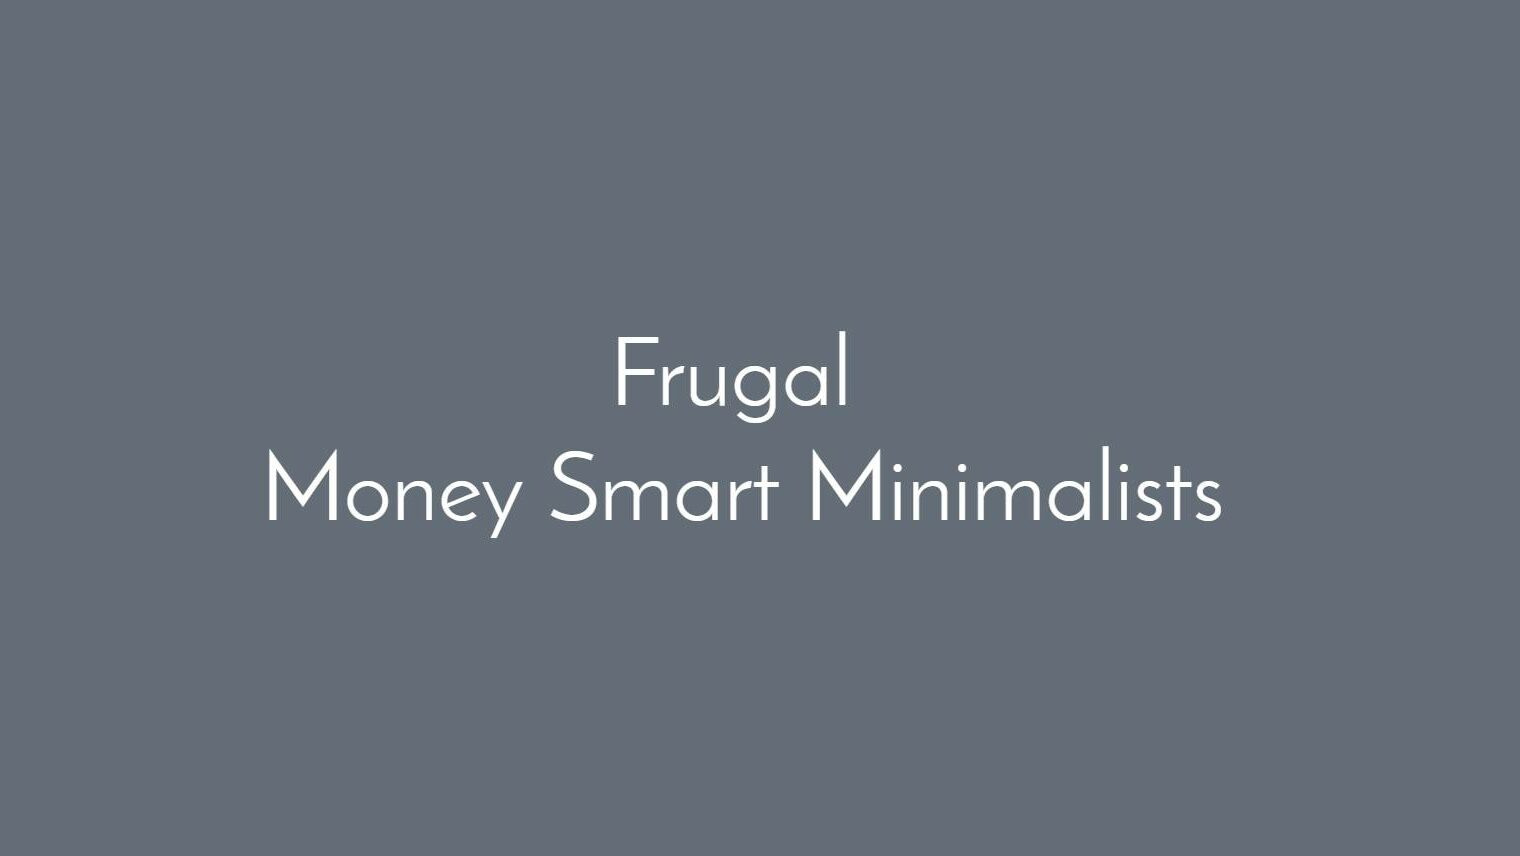 Frugal Money-Smart Minimalists Facebook group